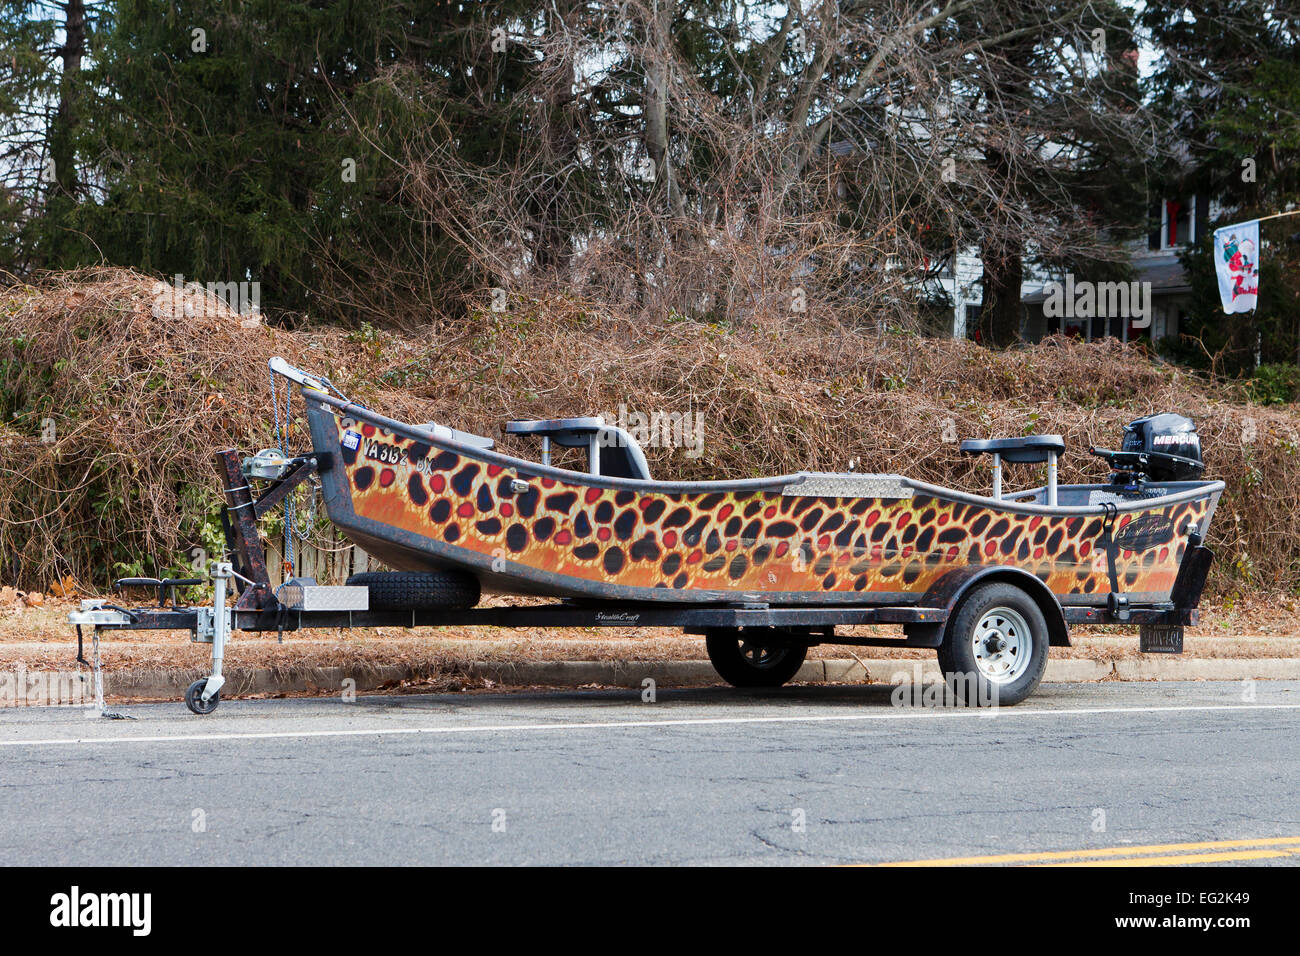 Sportsman fishing boat on trailer - USA Stock Photo